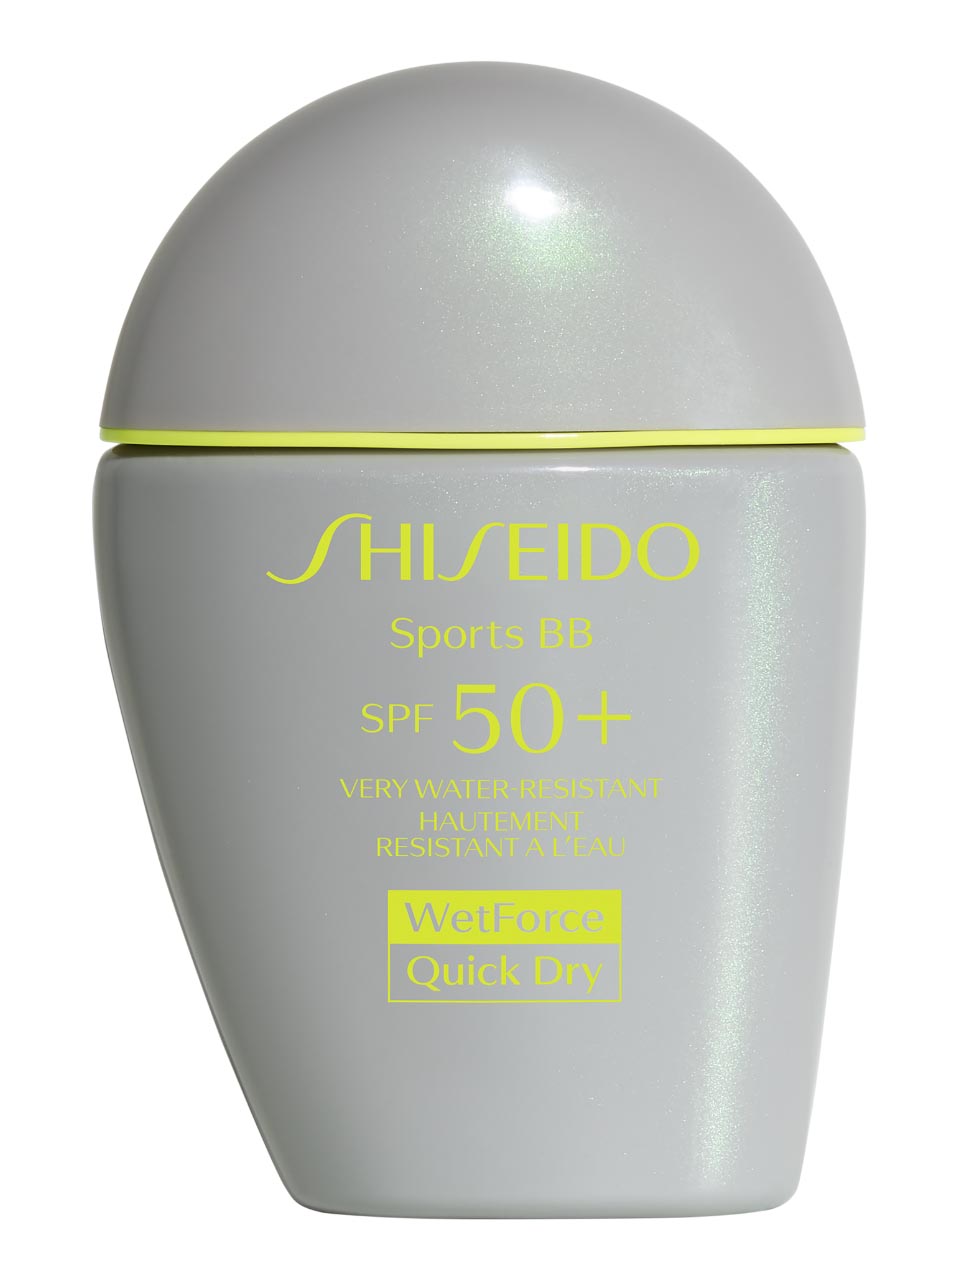 Shiseido Global Suncare Sports BB medium 30 ml null - onesize - 1